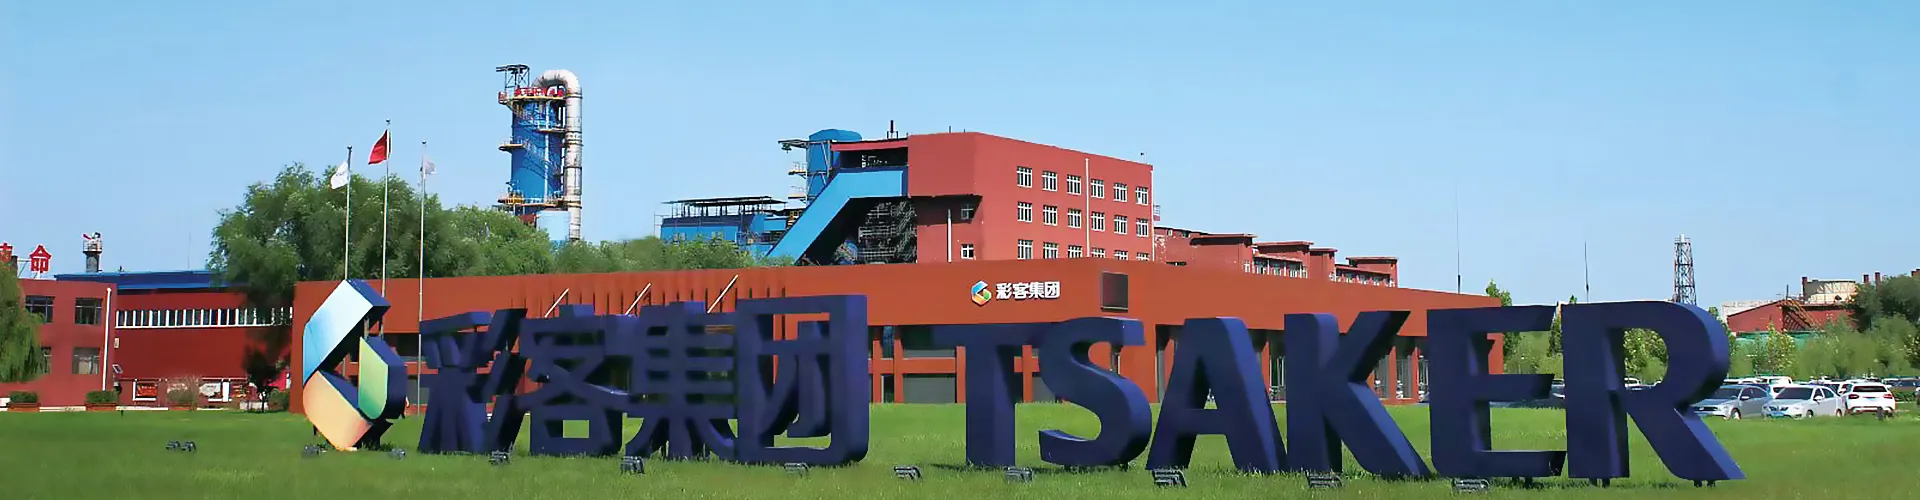 Hebei Tsaker New Material Technology Company Limited